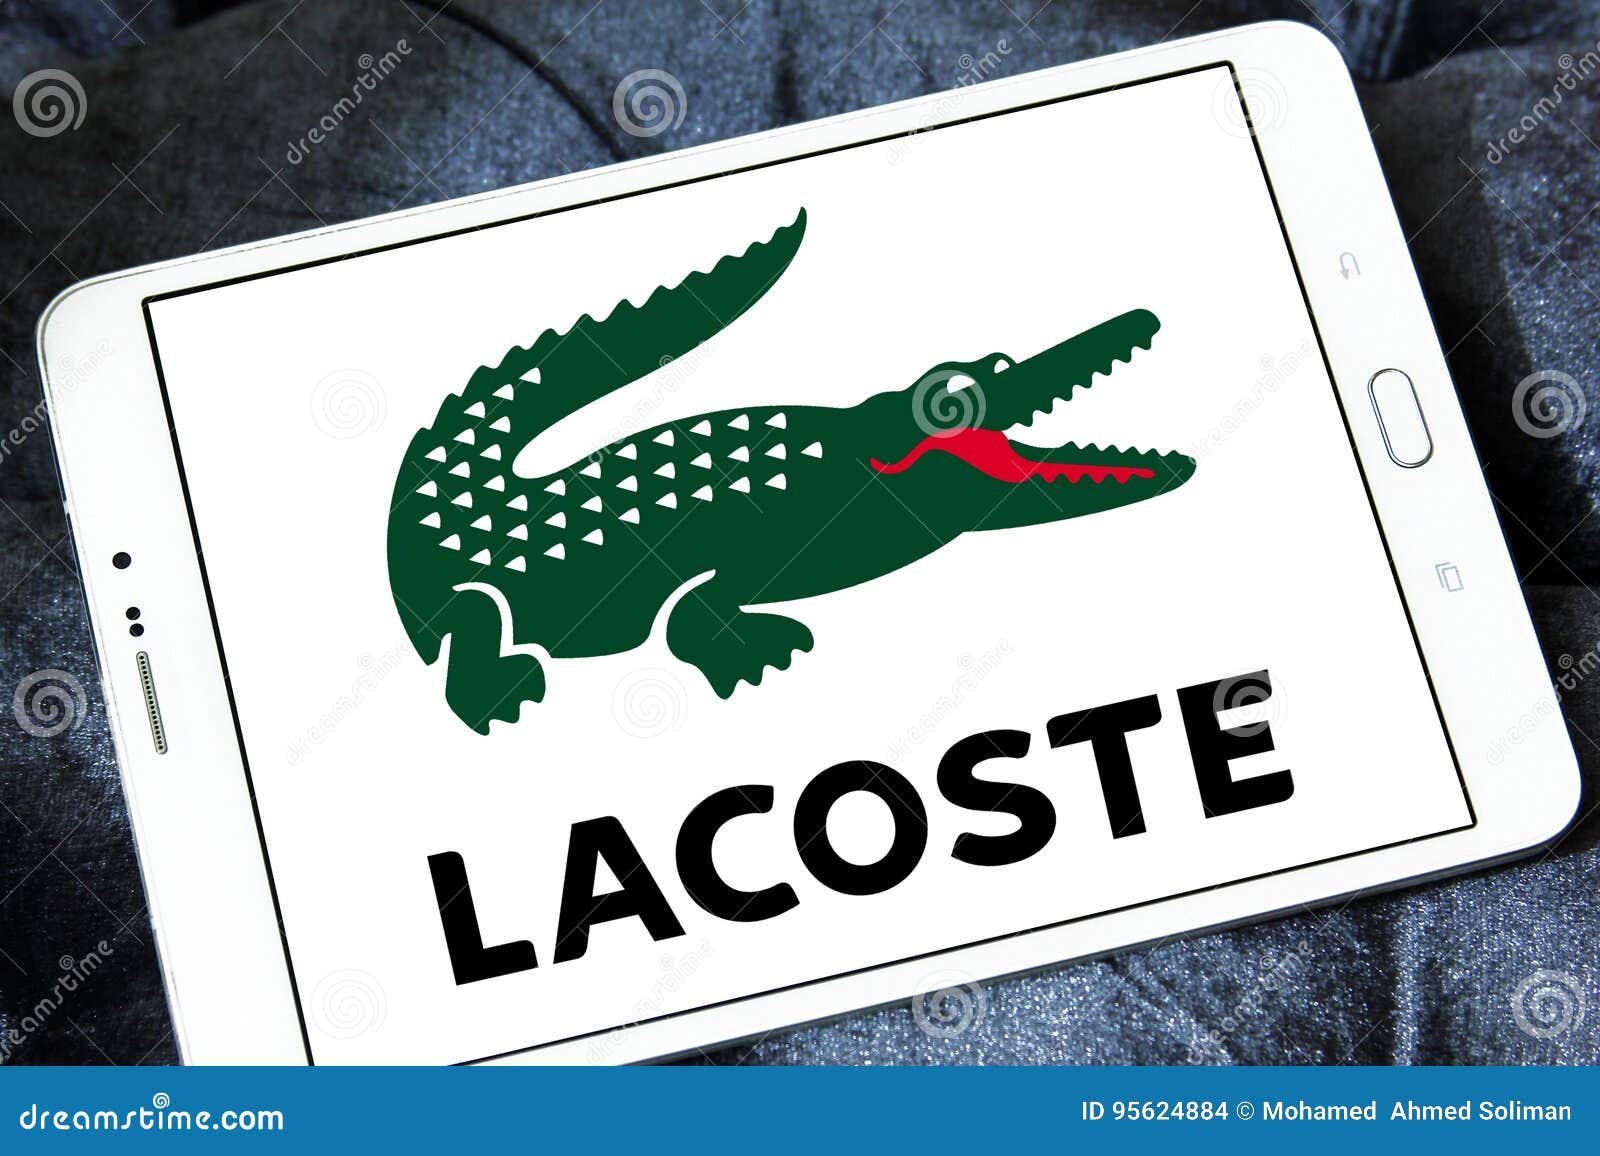 clothing company with crocodile logo